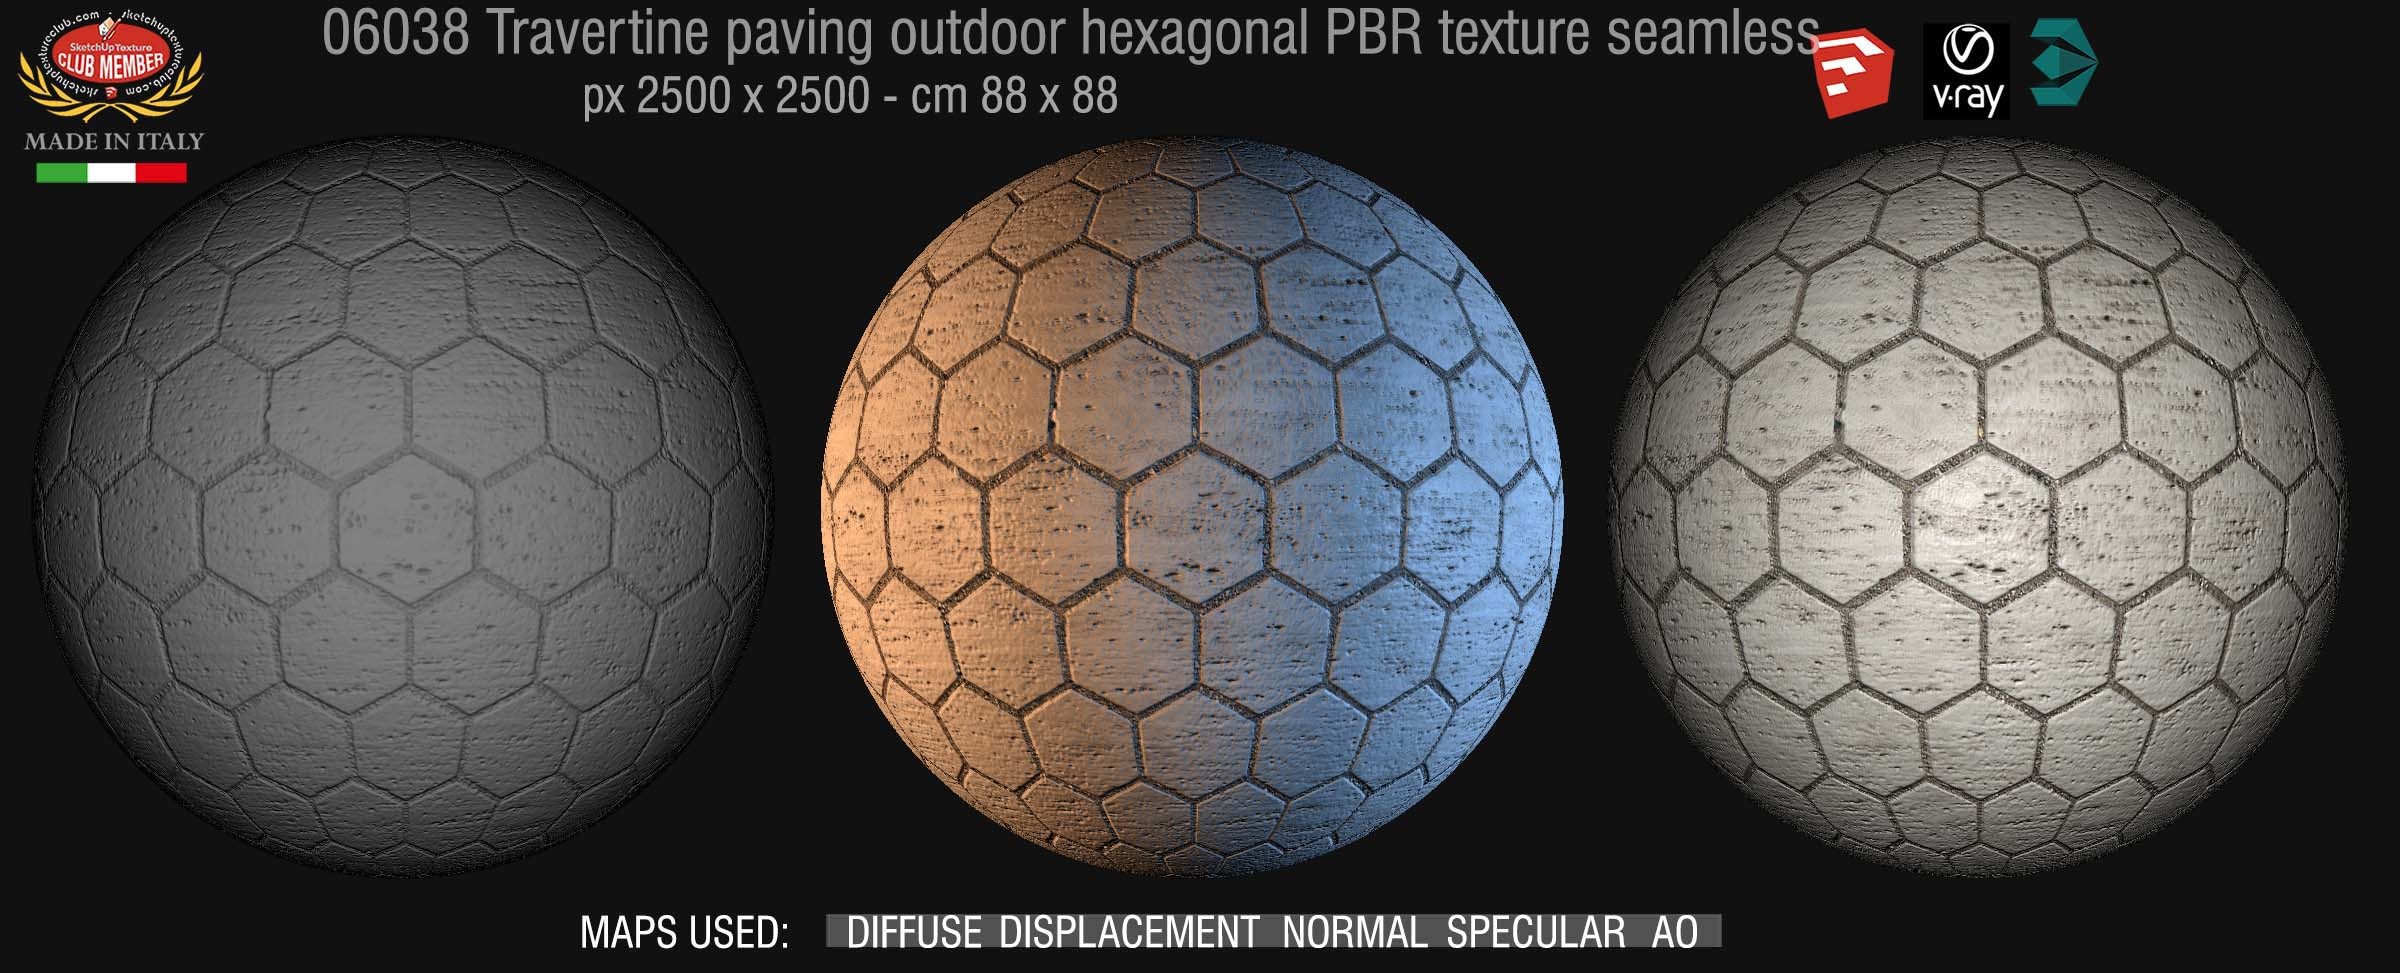 06038 Travertine paving hexagonal PBR texture seamless demo